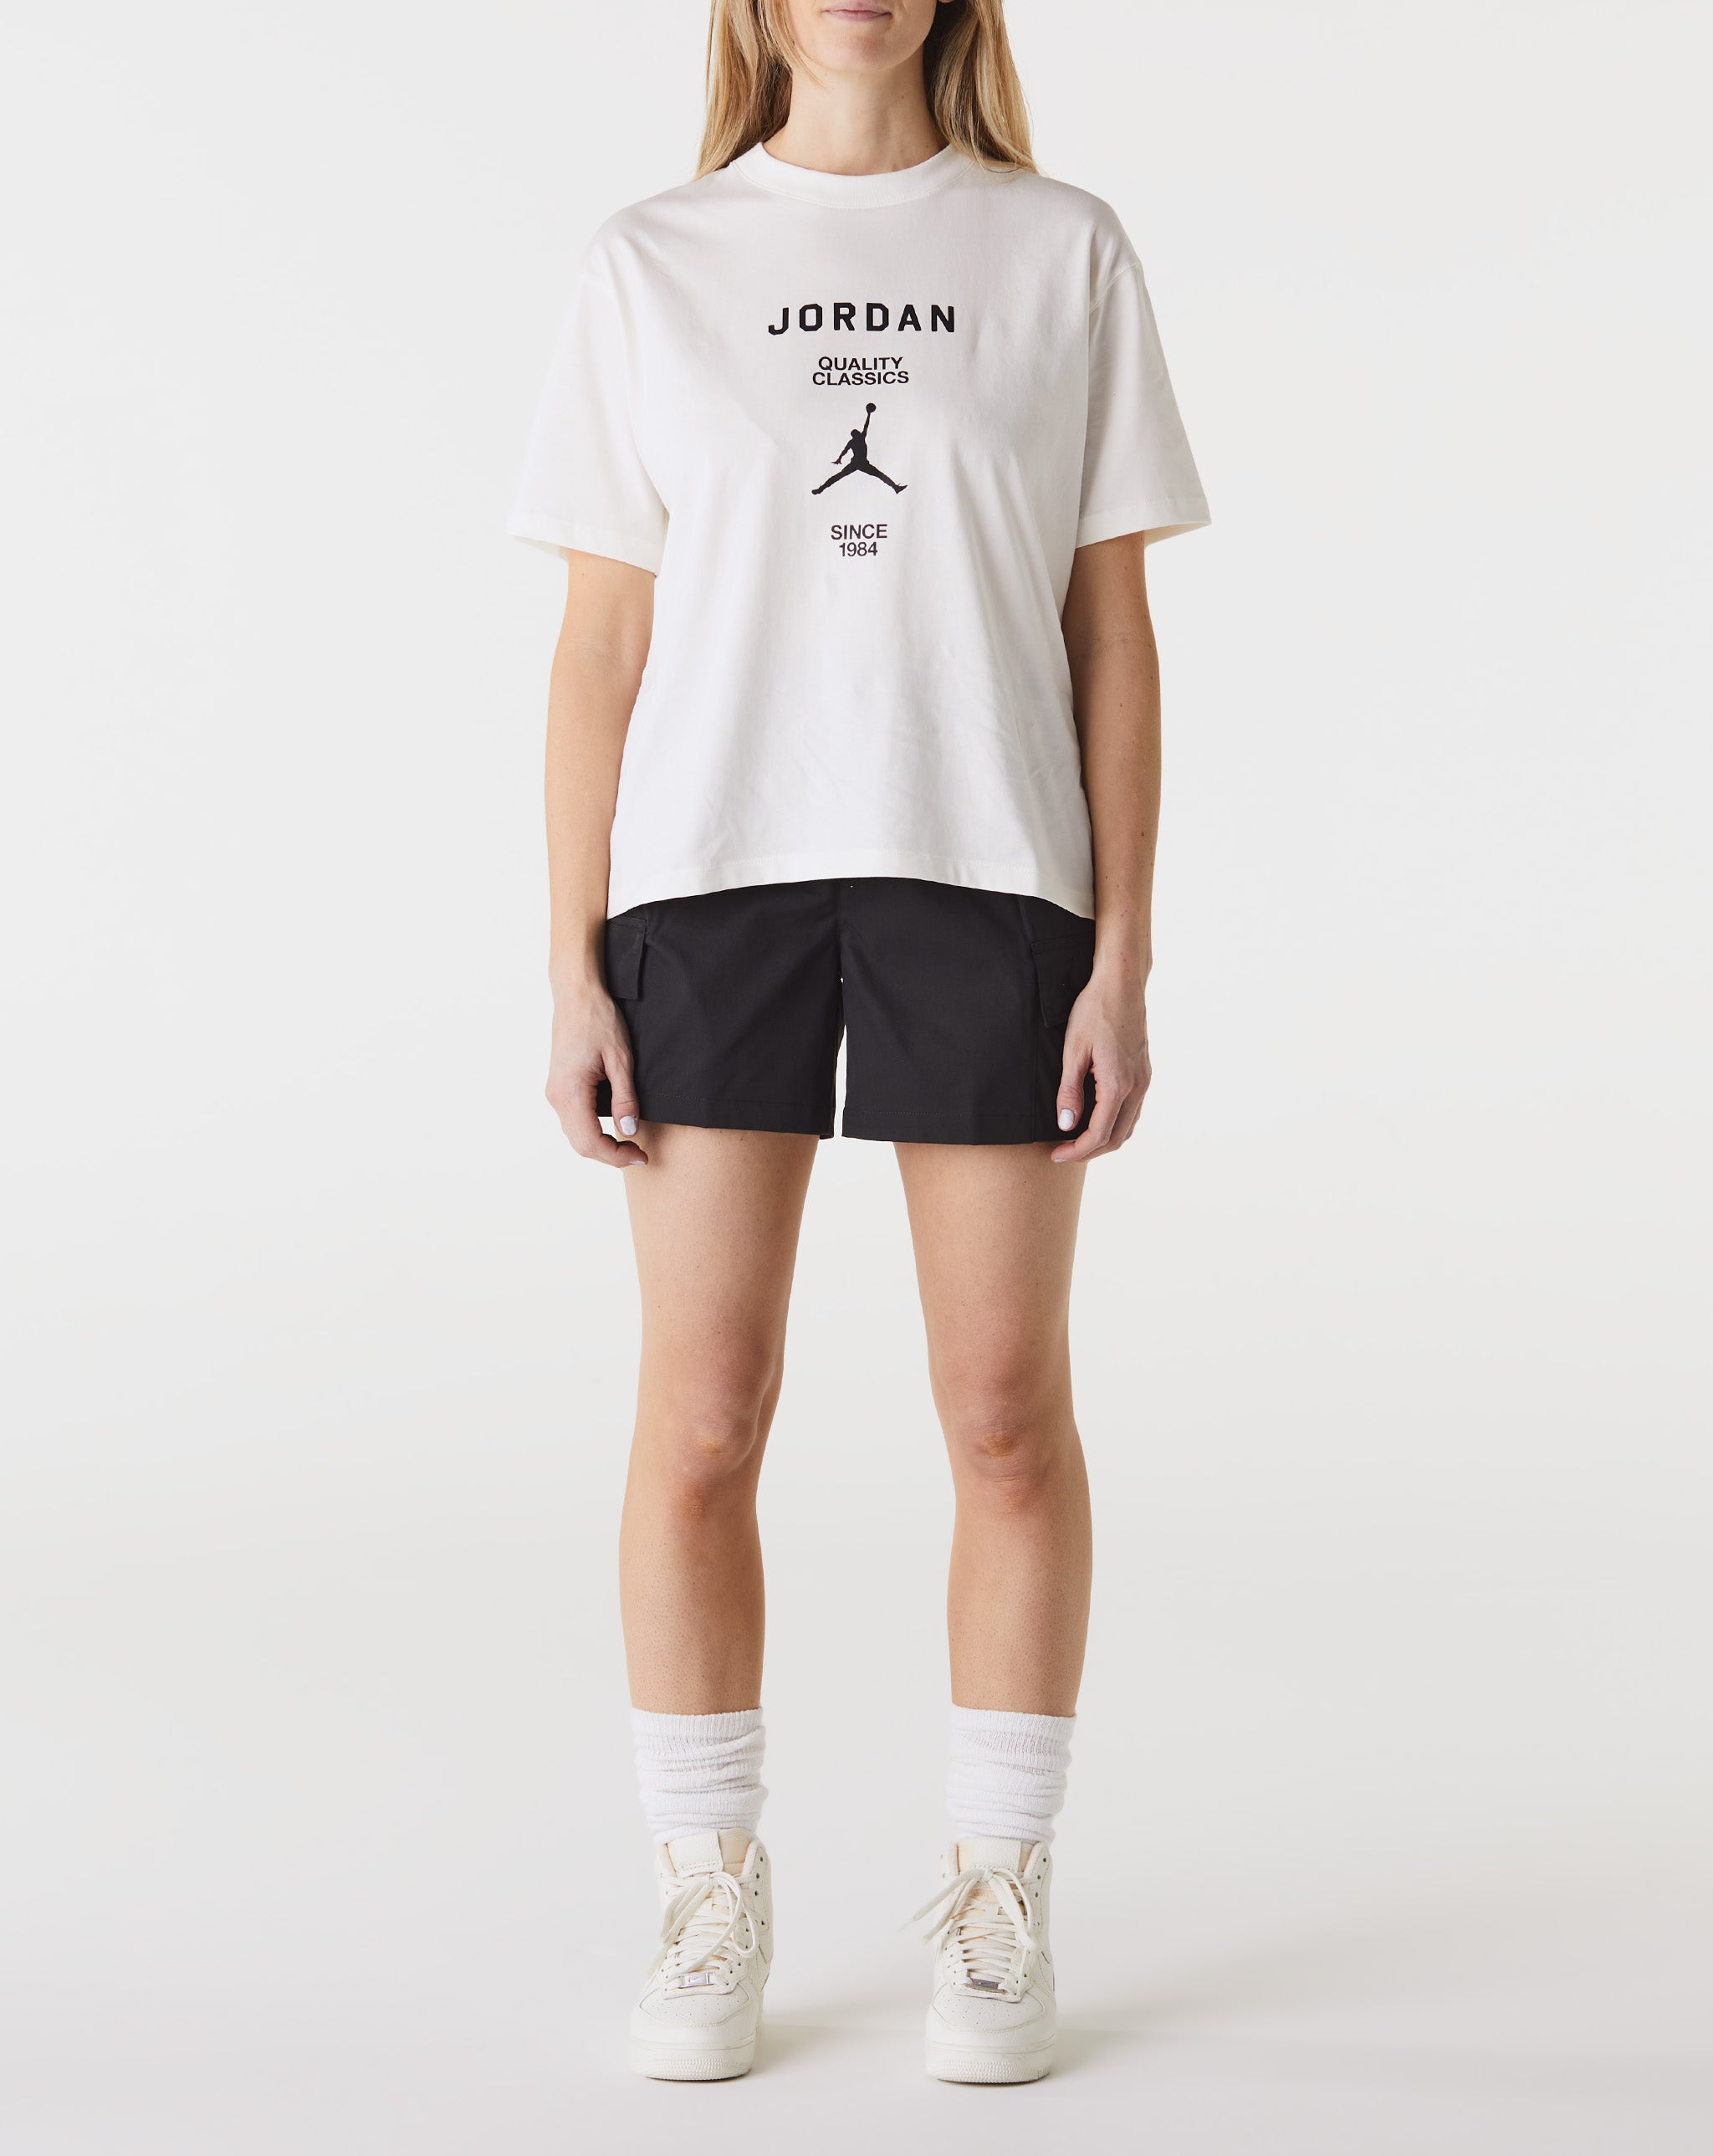 Air Jordan Women's Jordan Quality Classics T-Shirt  - XHIBITION